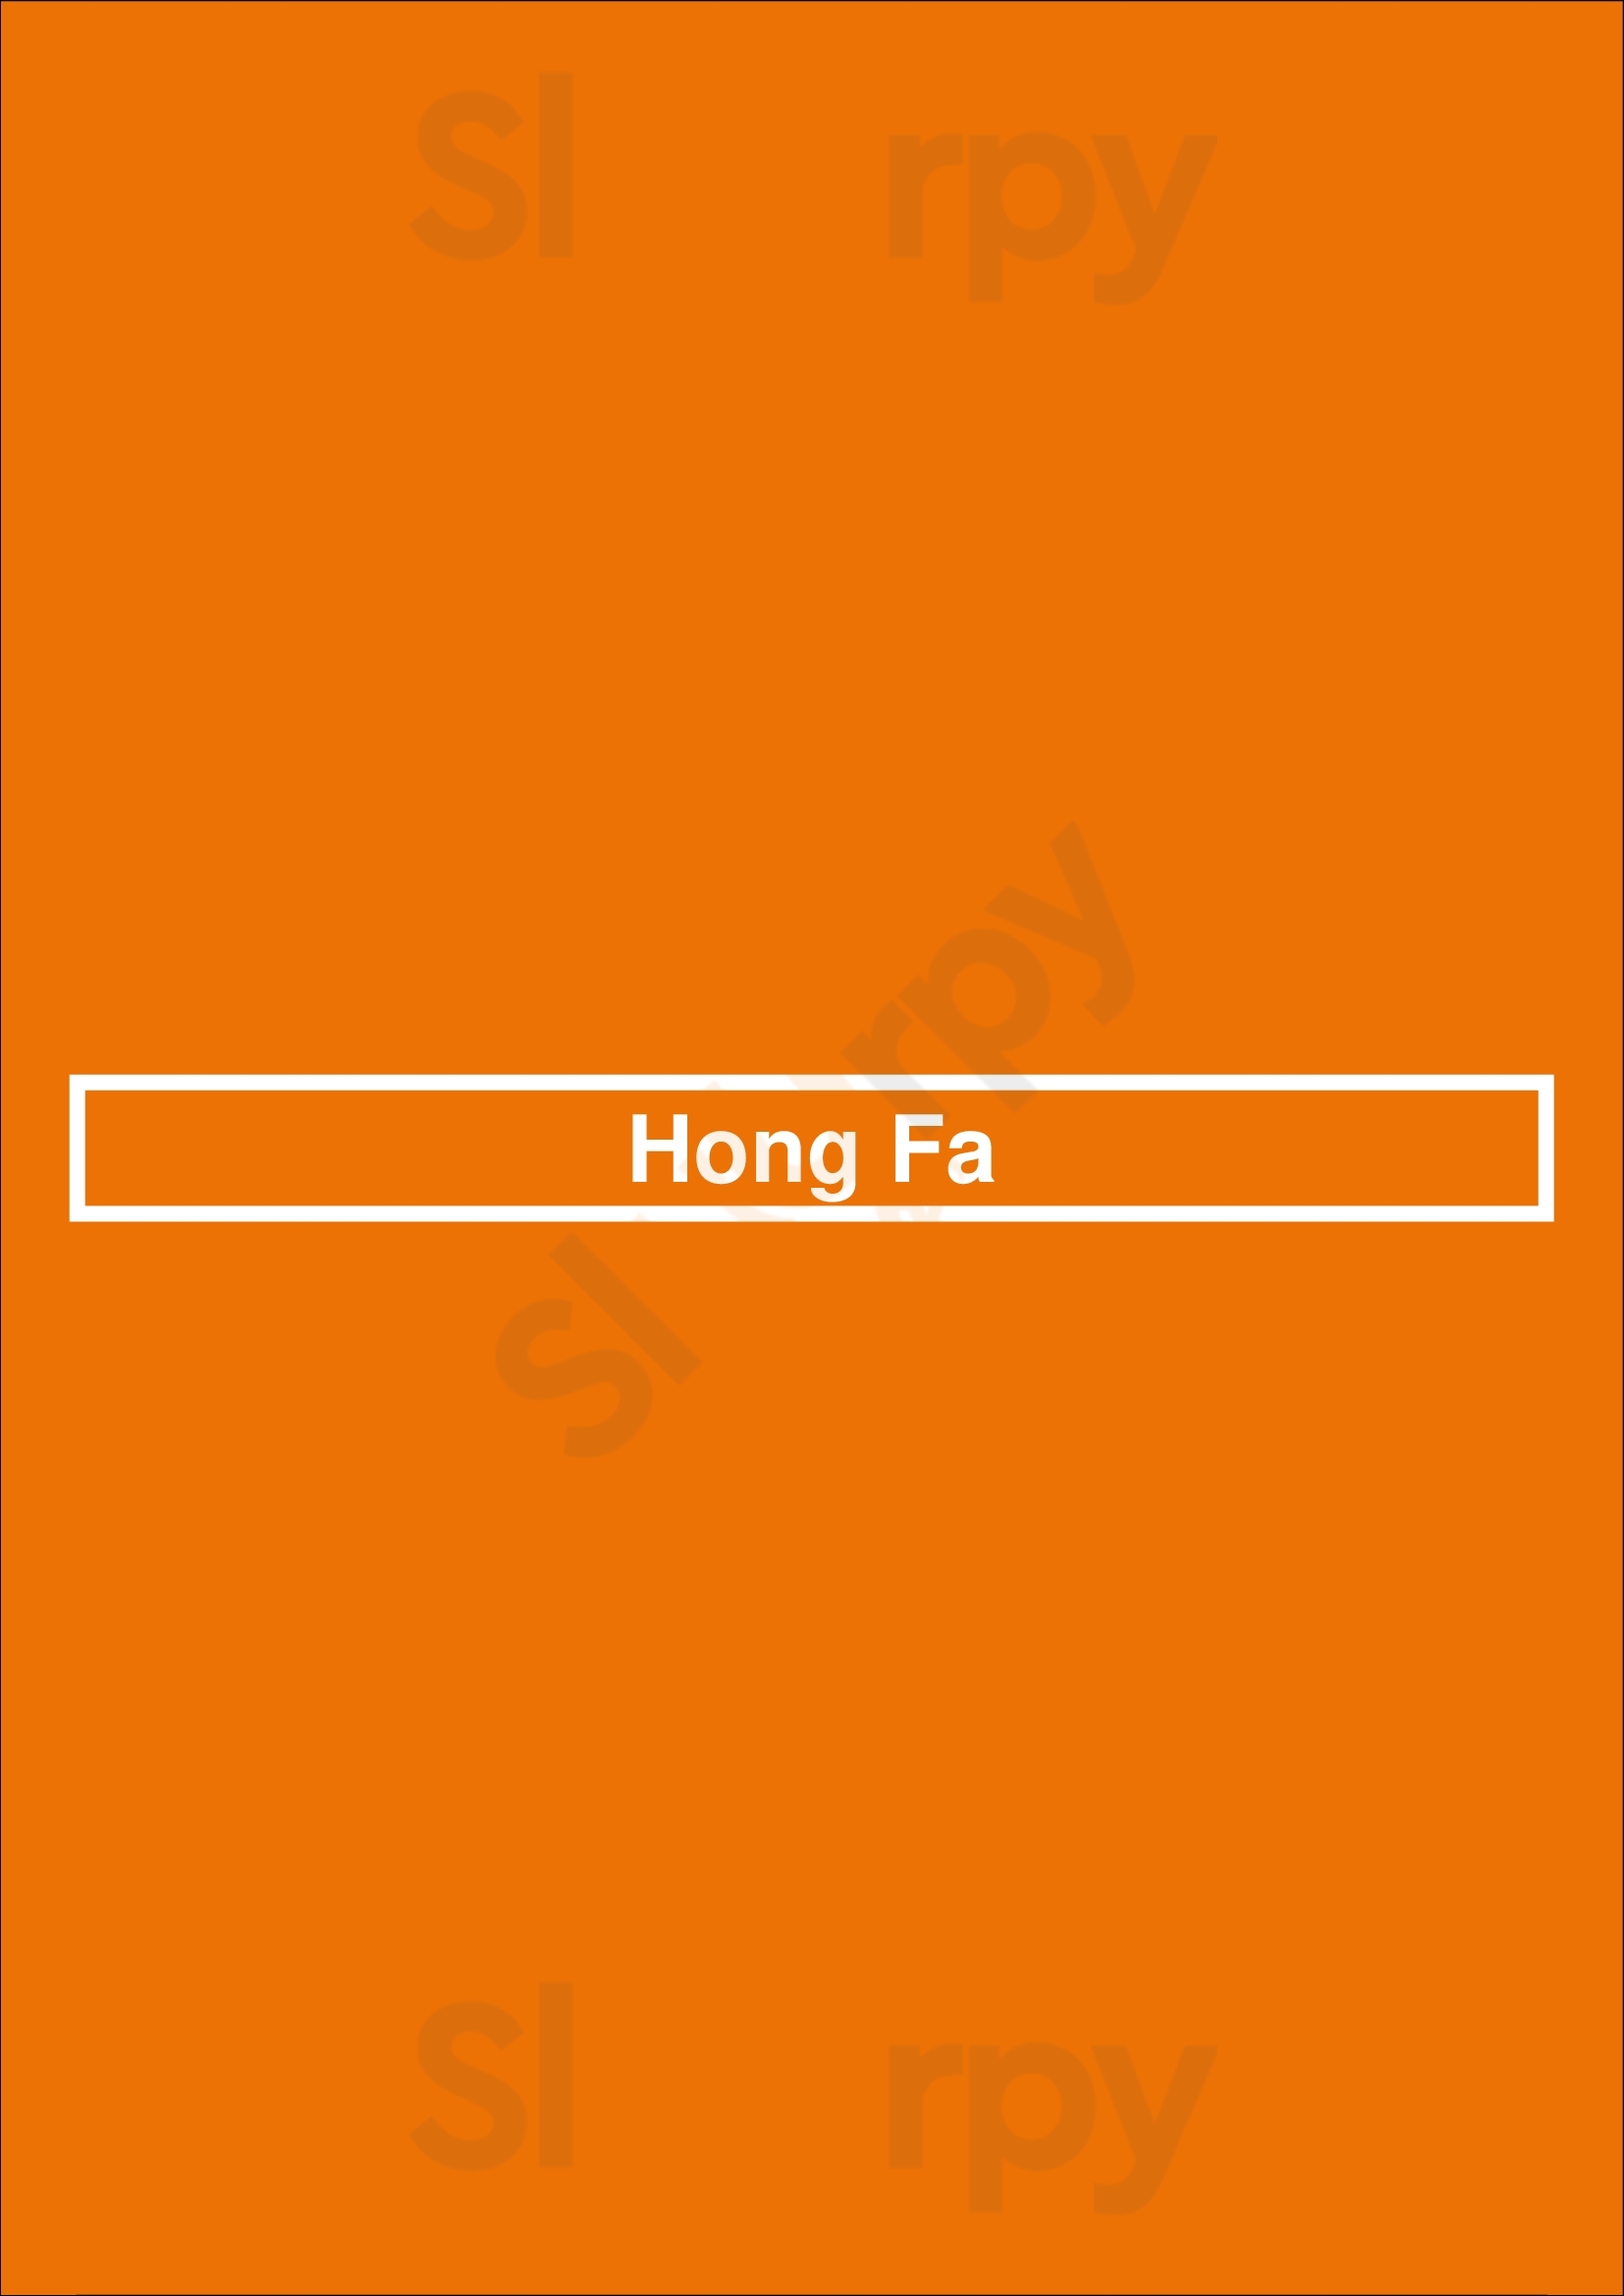 Hong Fa Zierikzee Menu - 1